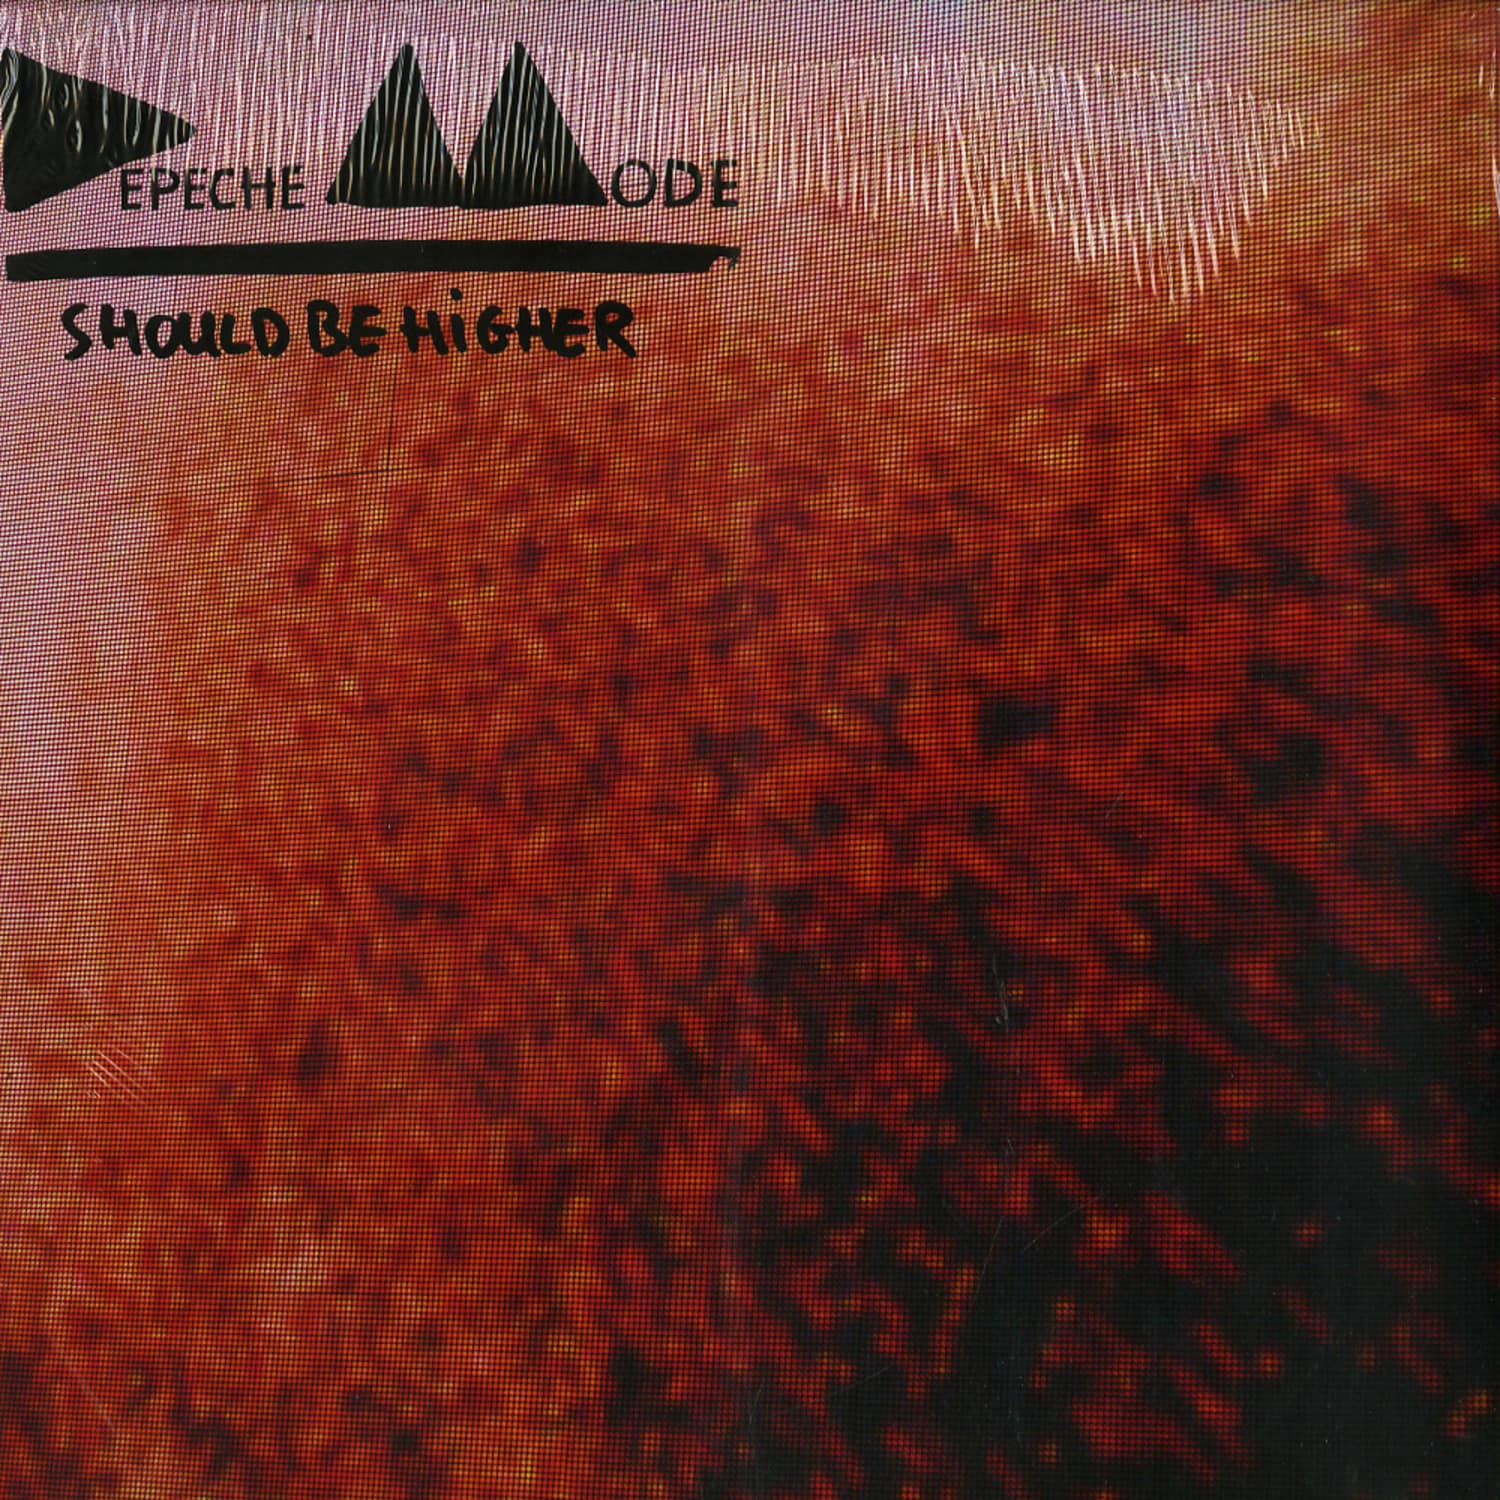 Depeche Mode - SHOULD BE HIGHER - REMIXES